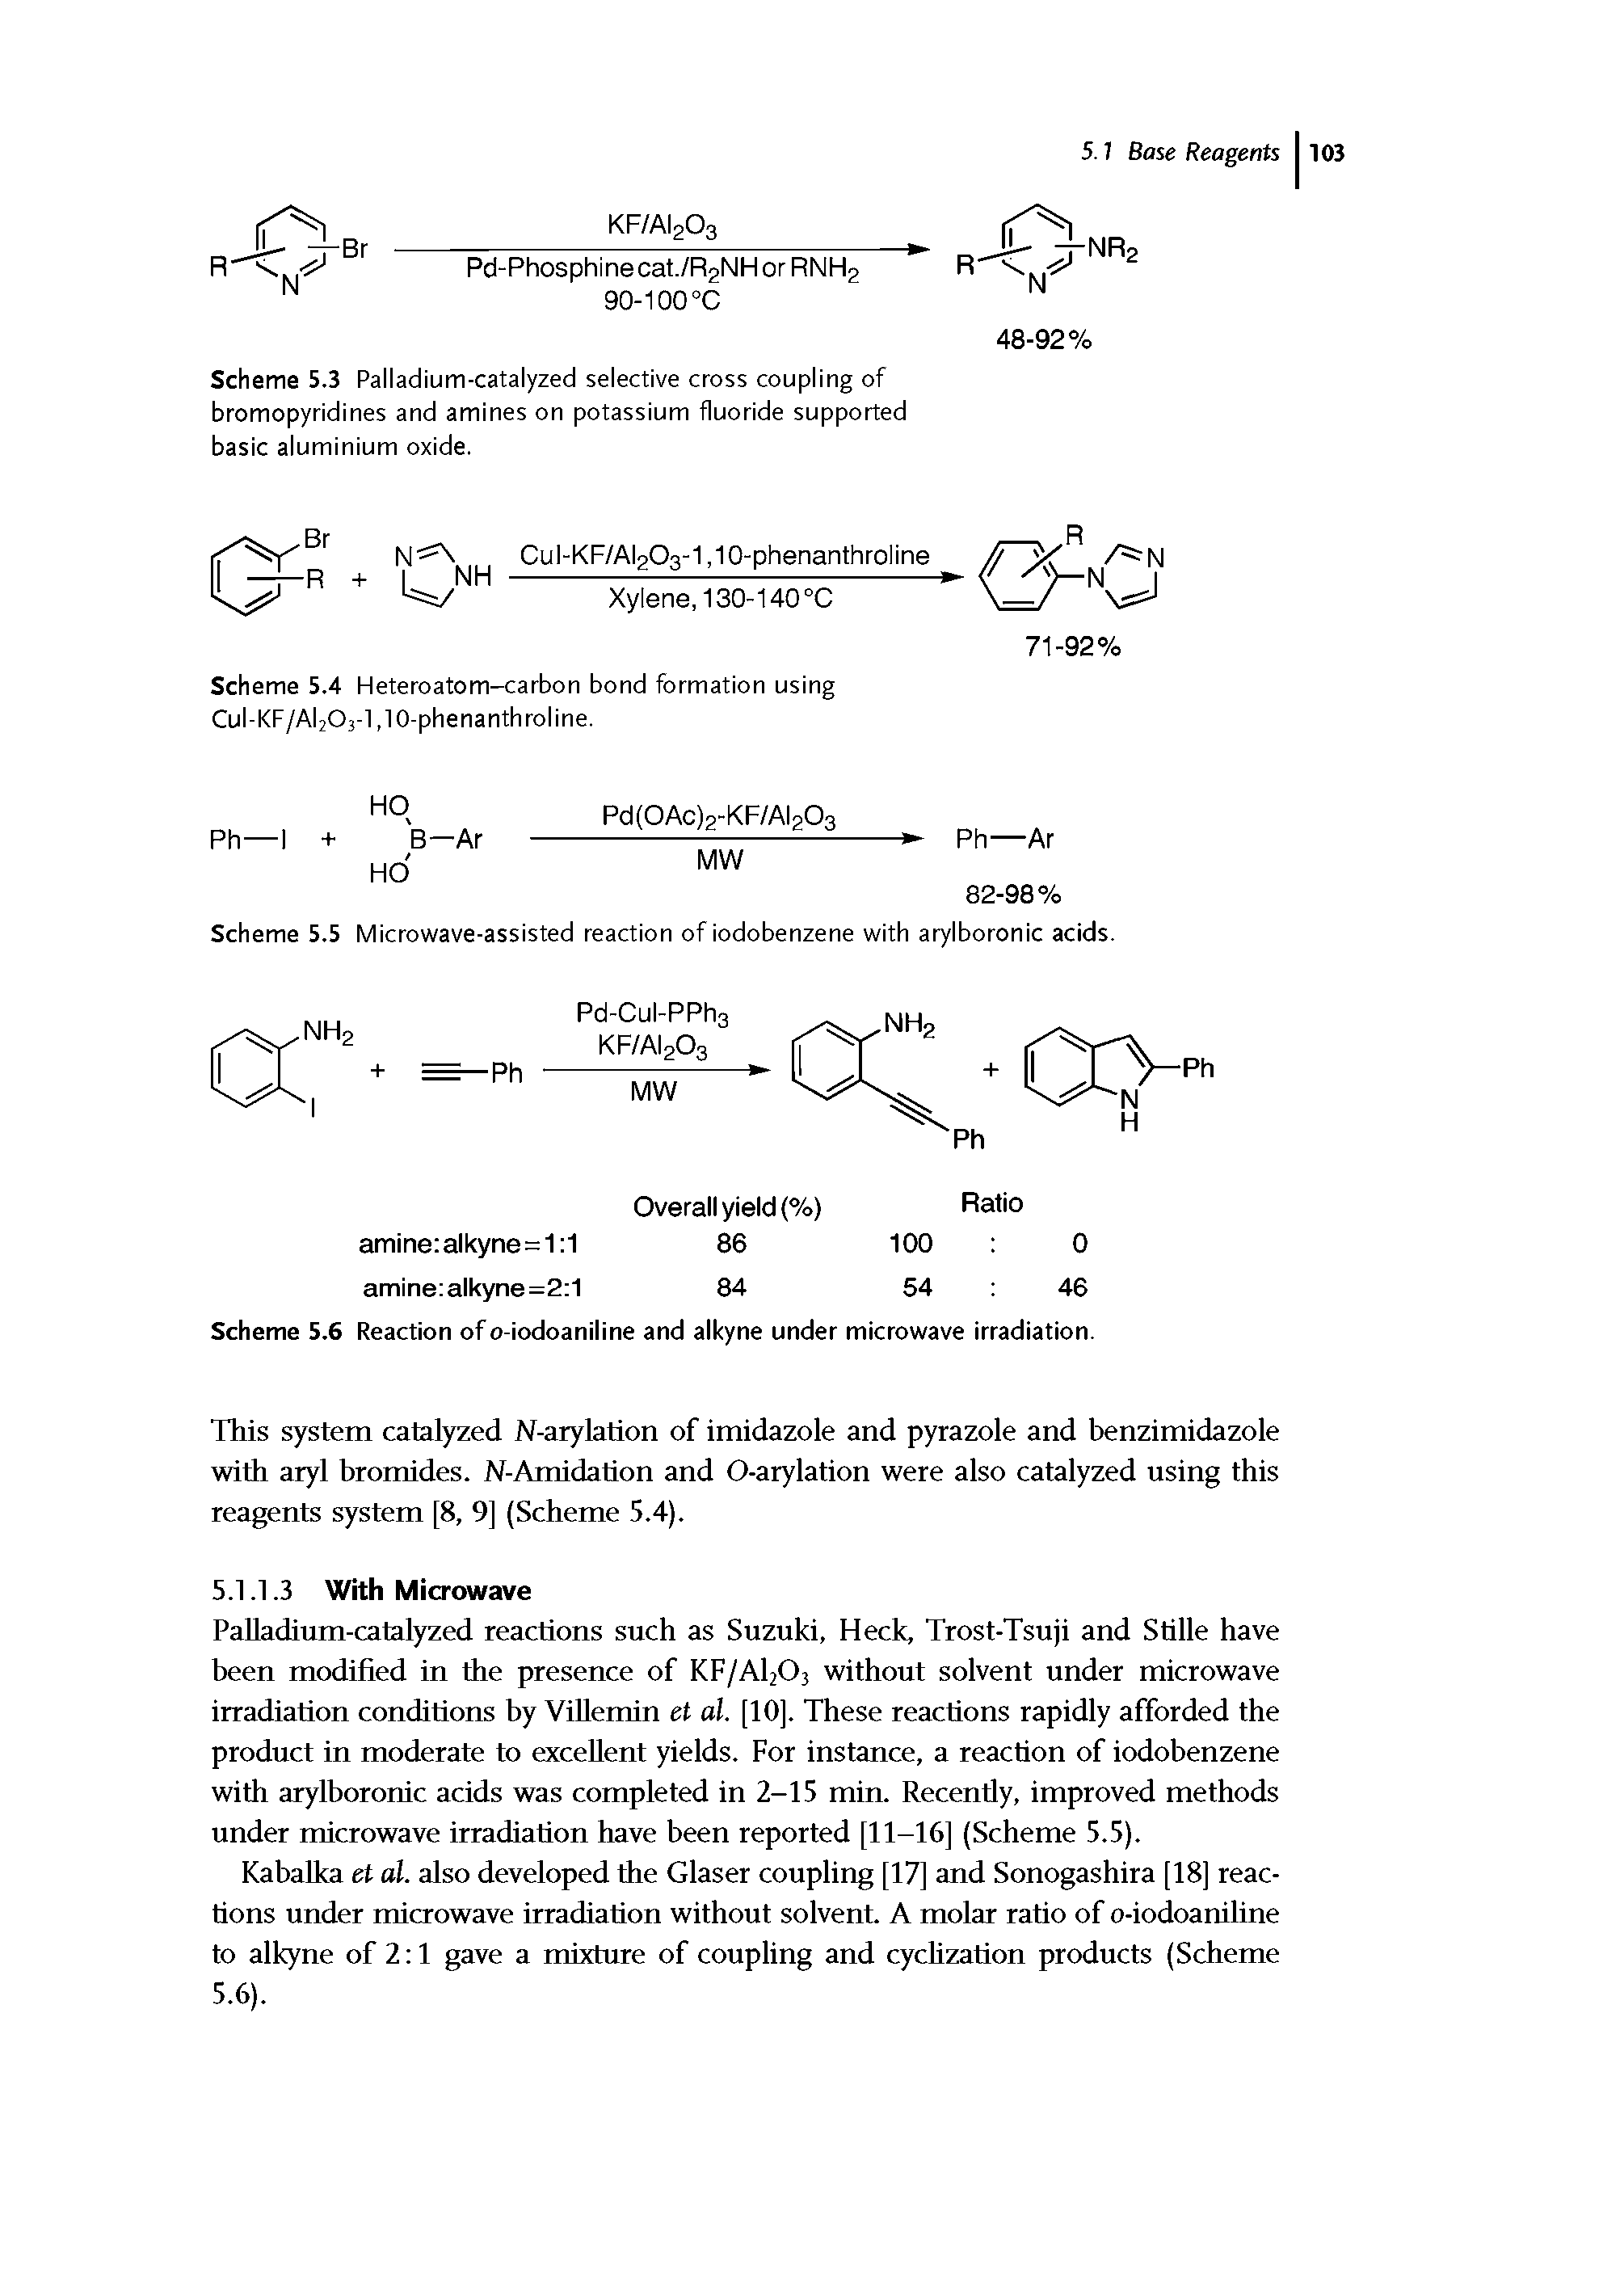 Scheme 5.3 Palladium-catalyzed selective cross coupling of bromopyridines and amines on potassium fluoride supported basic aluminium oxide.